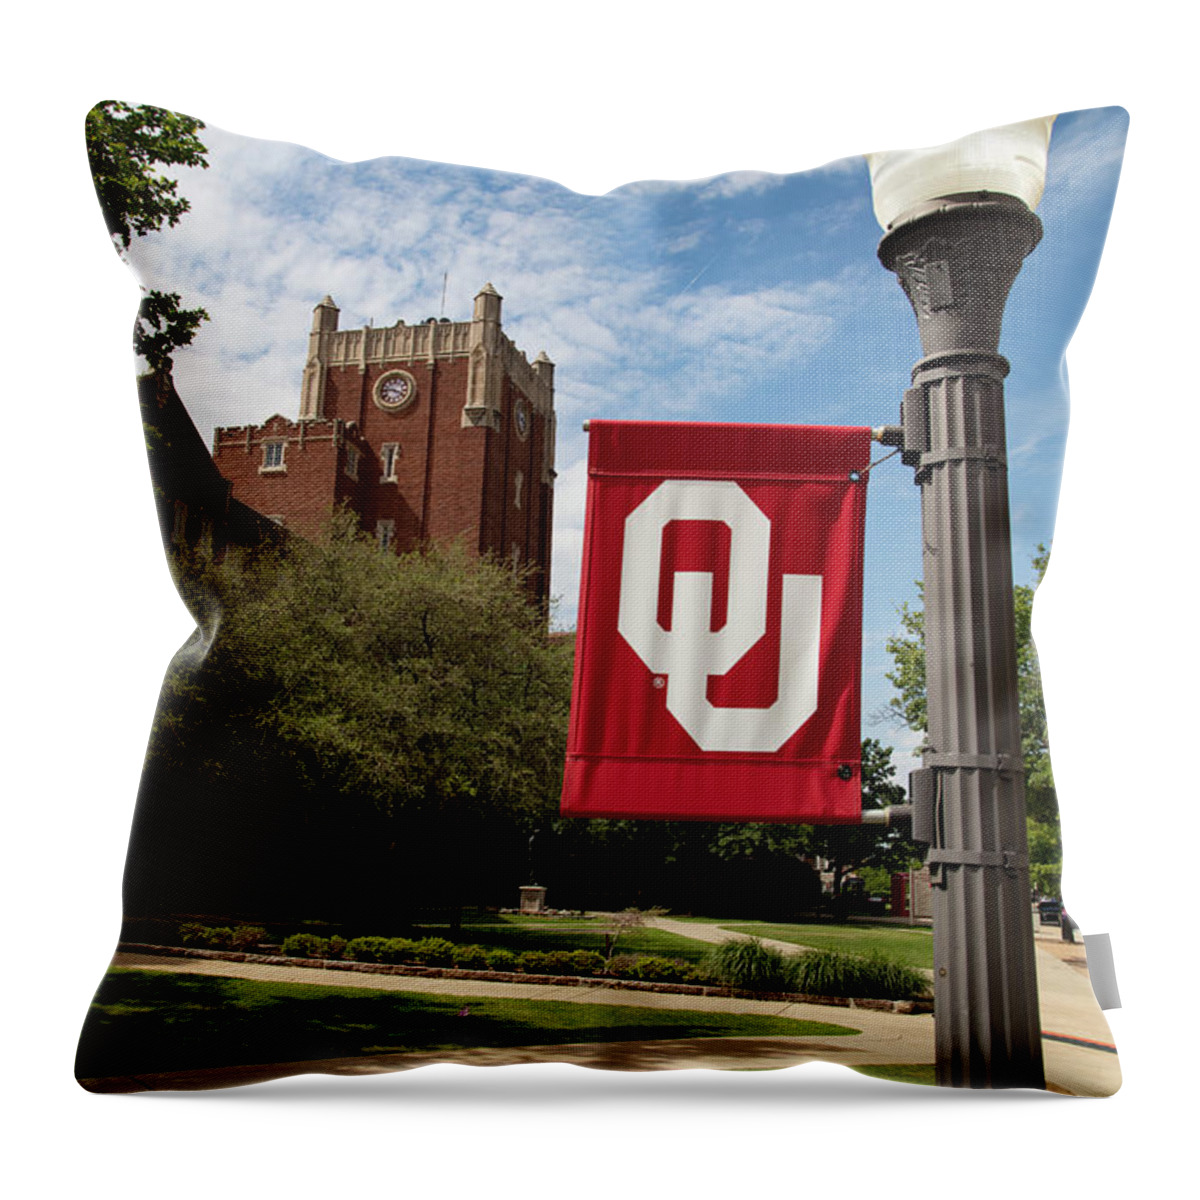 Big 12 Throw Pillow featuring the photograph Clara E. Jones Administration at University of Oklahoma by Eldon McGraw